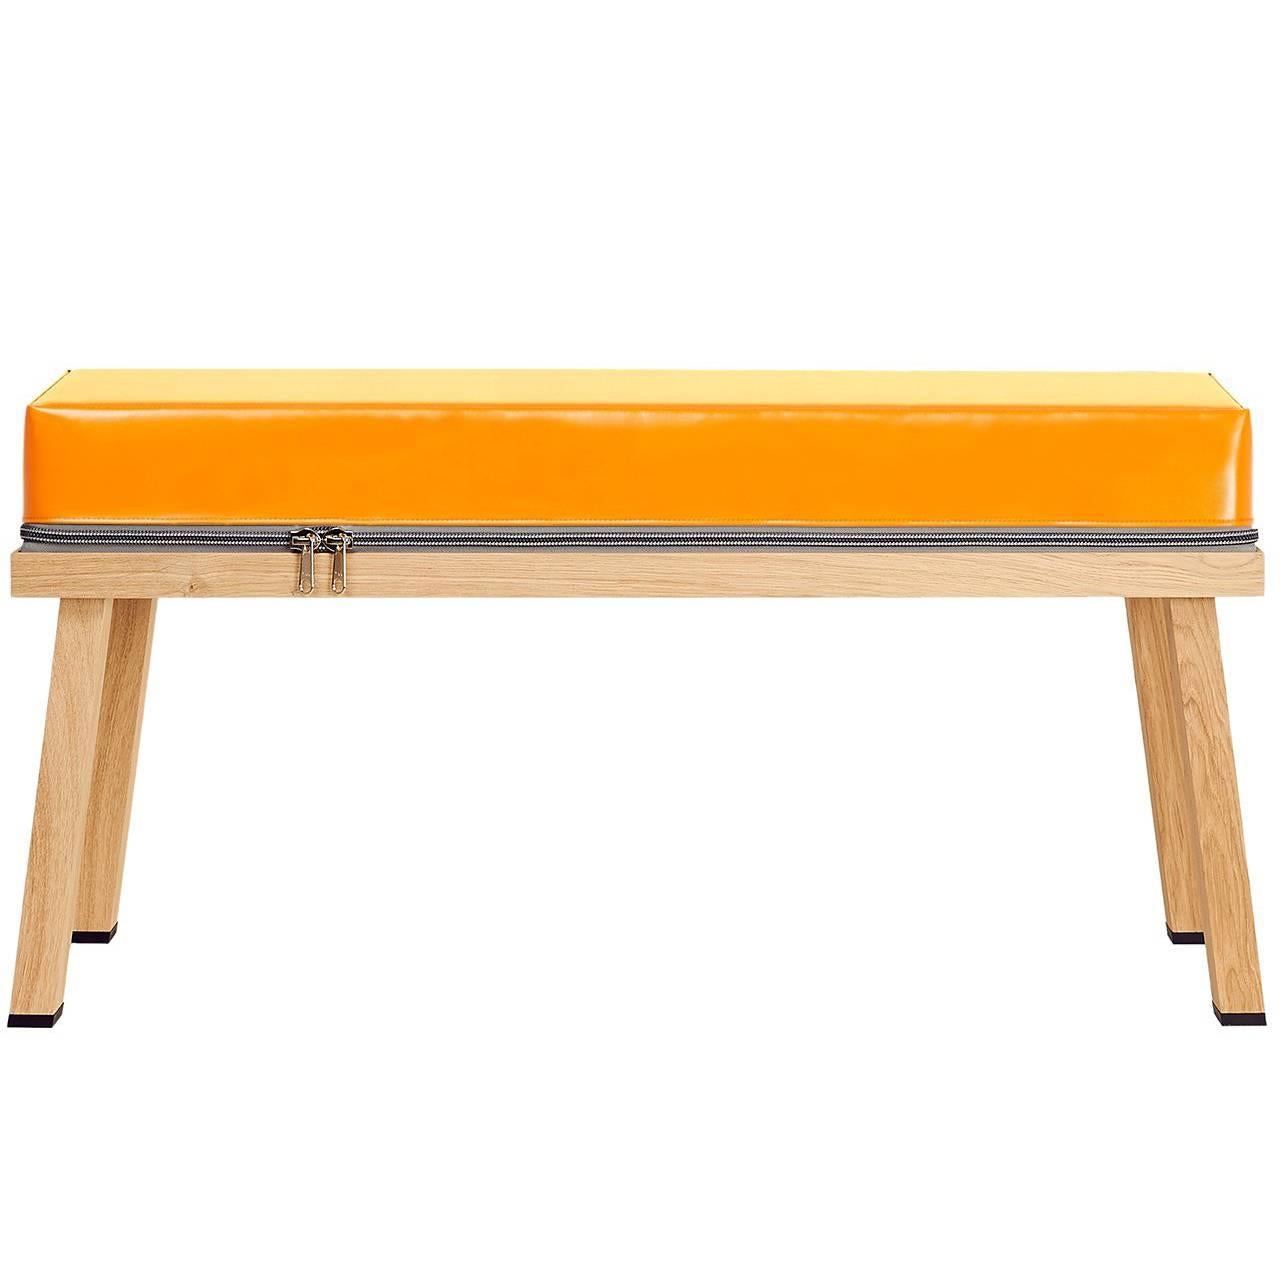 Visser and Meijwaard Truecolors Bench in Orange PVC Cloth with Zipper For Sale